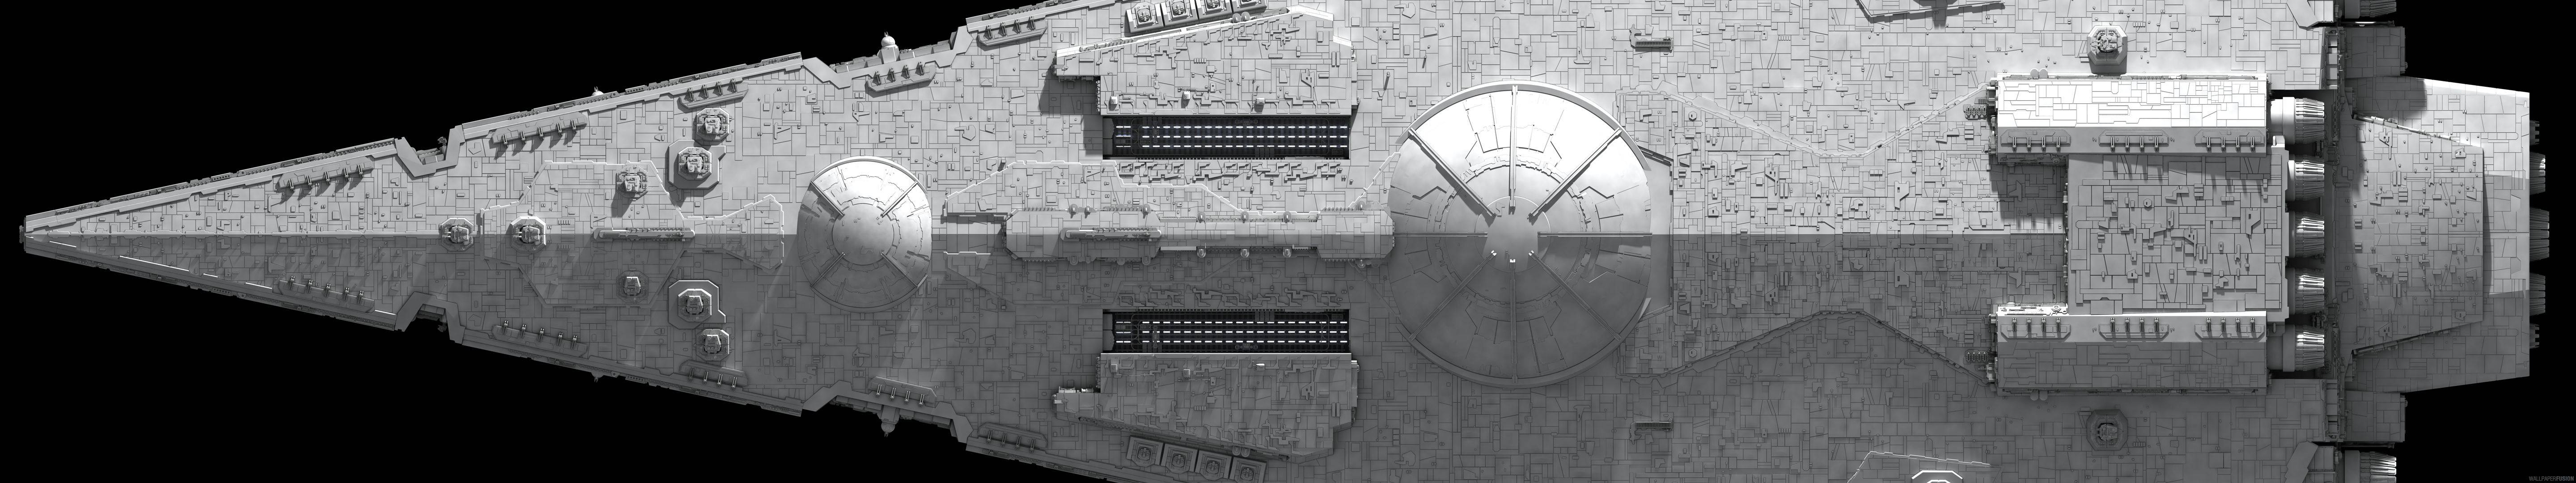 Star Wars HD Wallpaper | Background Image | 5760x1080 | ID ...